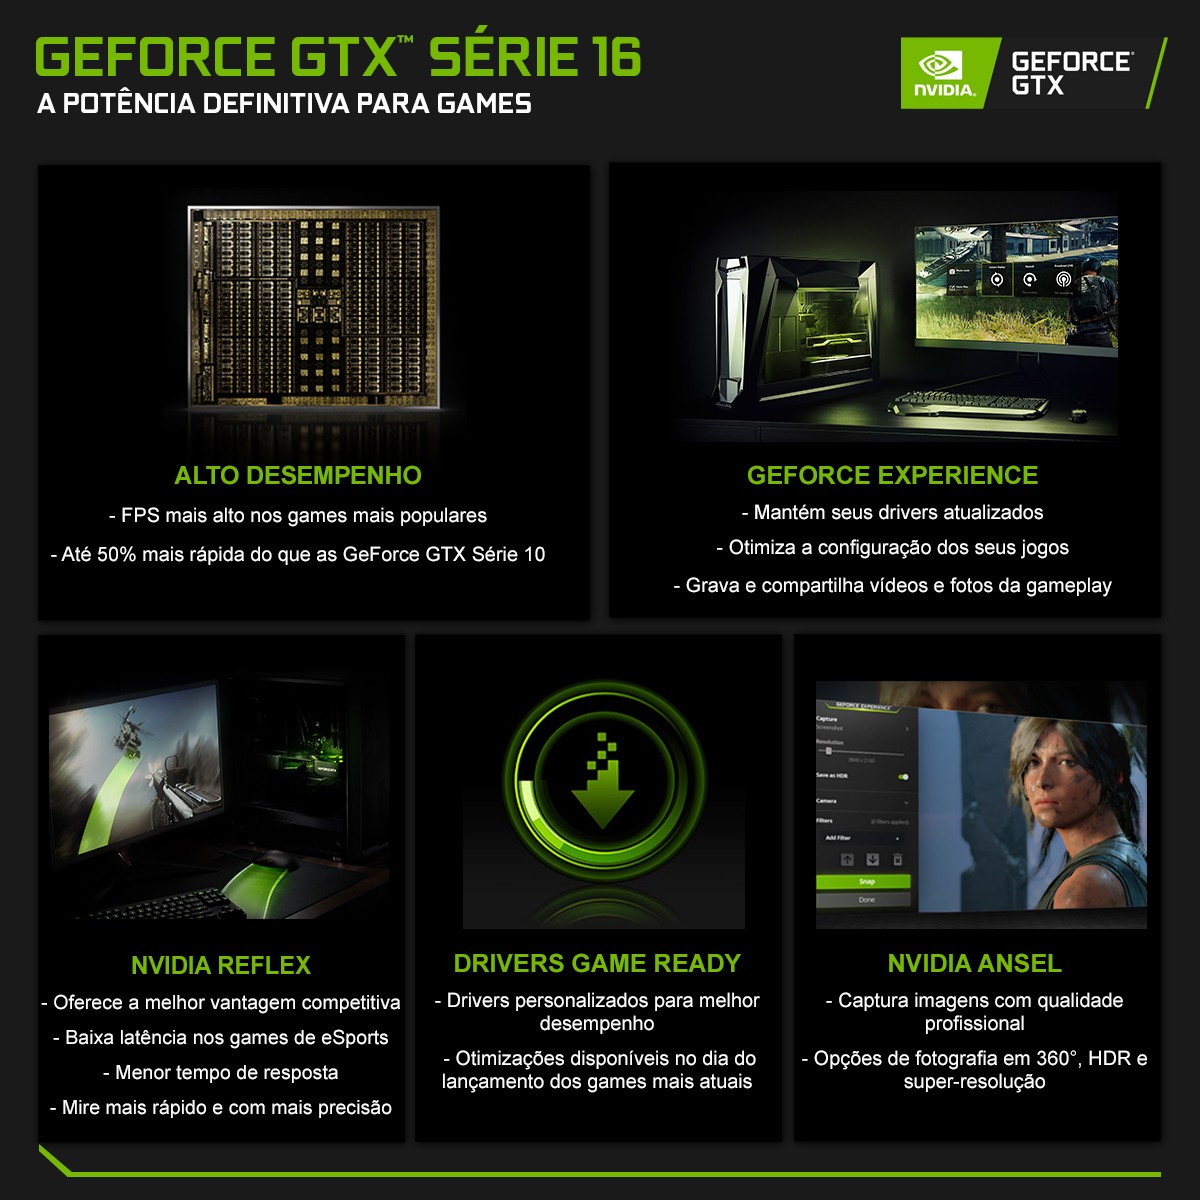 Placa de Vídeo Asus GeForce GTX 1650 Dual OC Edition, 4GB, GDDR6, 128Bits, DUAL-GTX1650-O4G